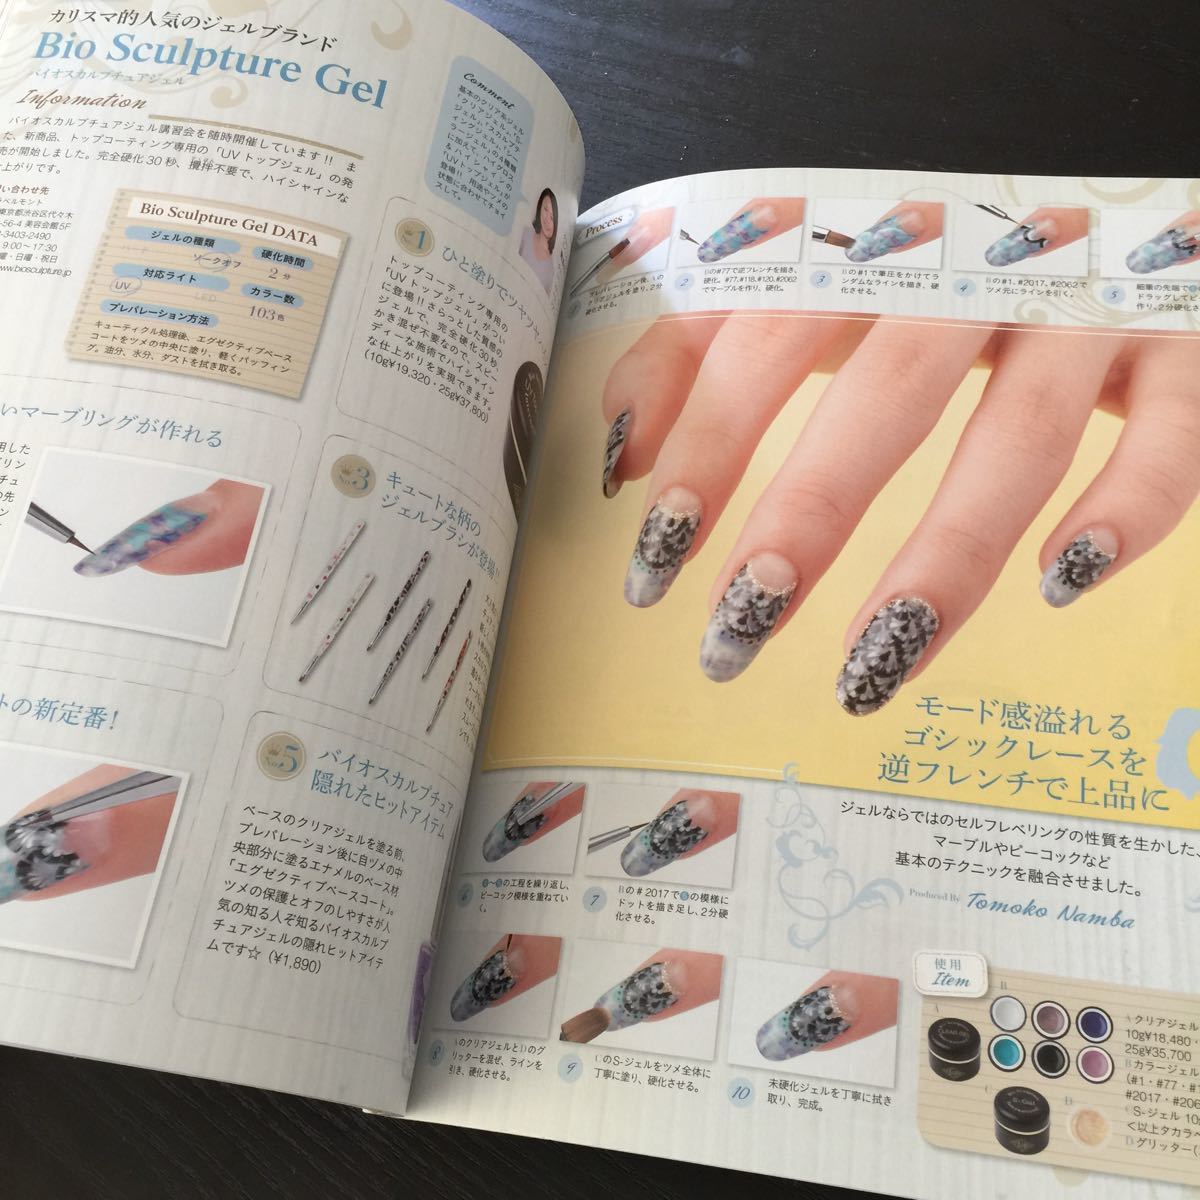 ki70 gel nails BOOK nail nail false nails design nails salon art chip pattern woman stylish scalp manicure tool official certification 